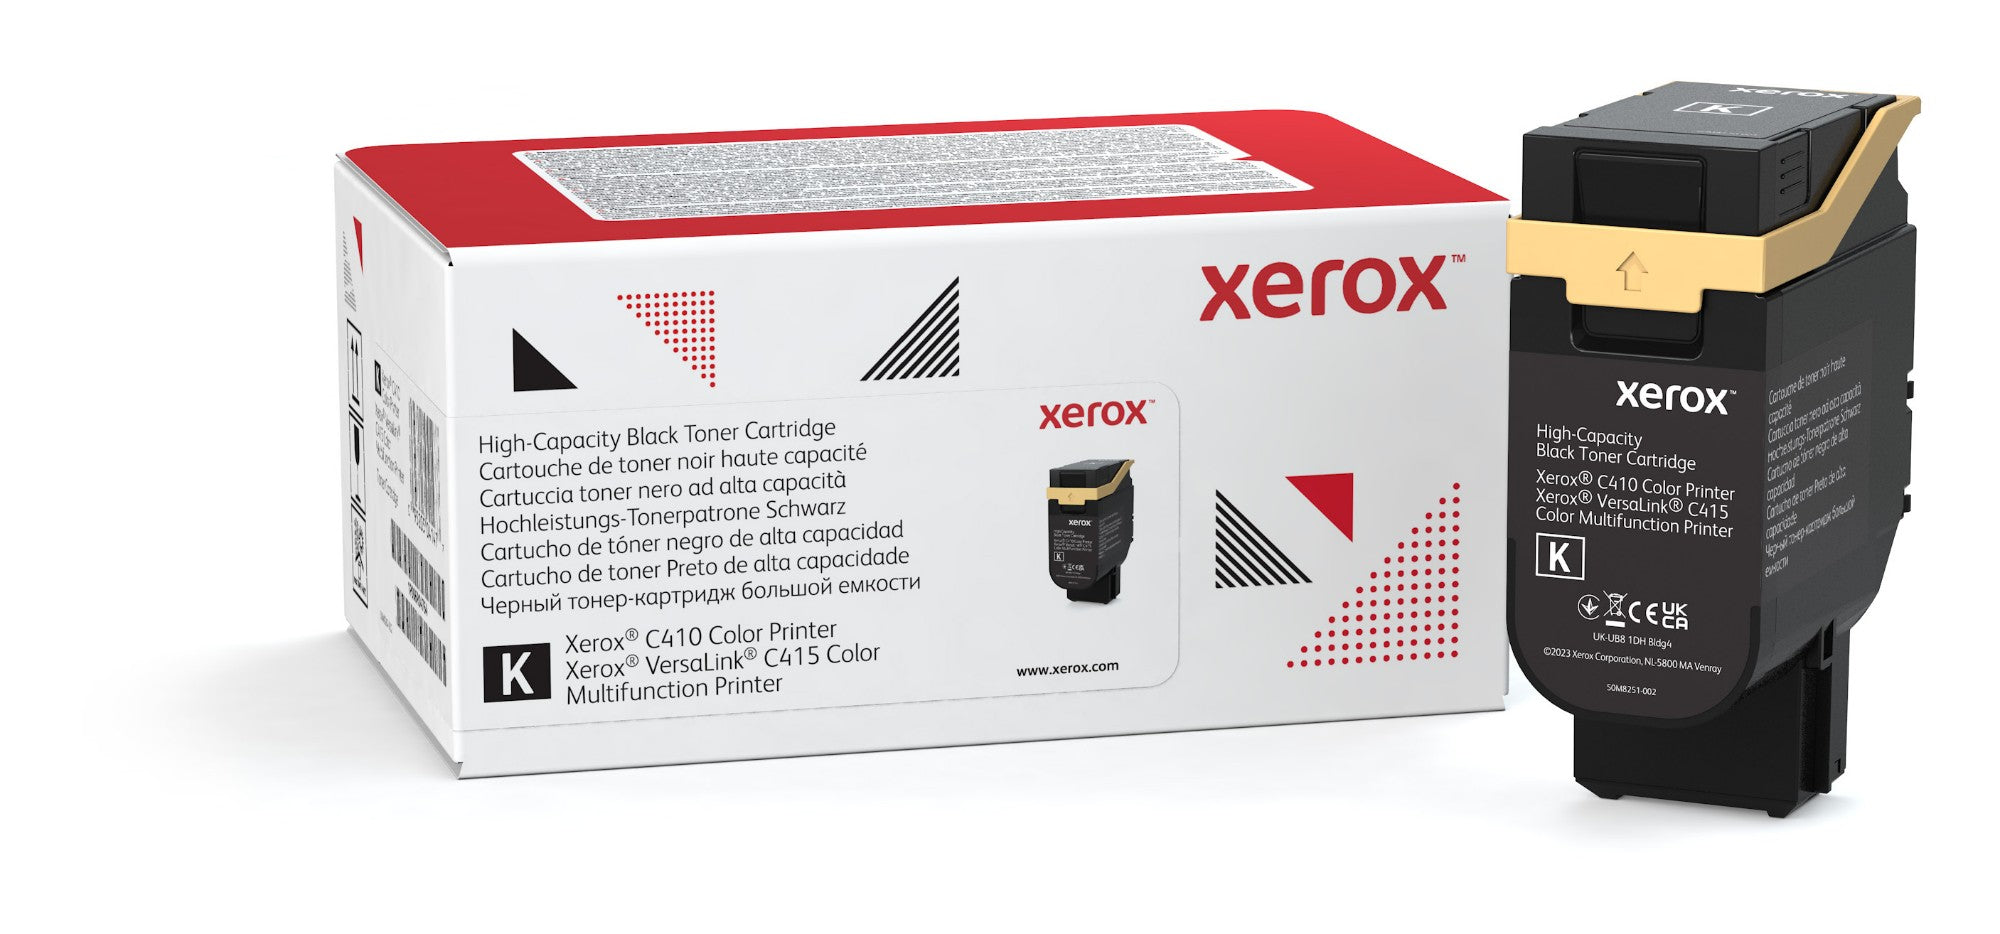 Xerox 006R04685 Toner-kit black high-capacity, 10.5K pages ISO/IEC 19752 for Xerox VersaLink C 410